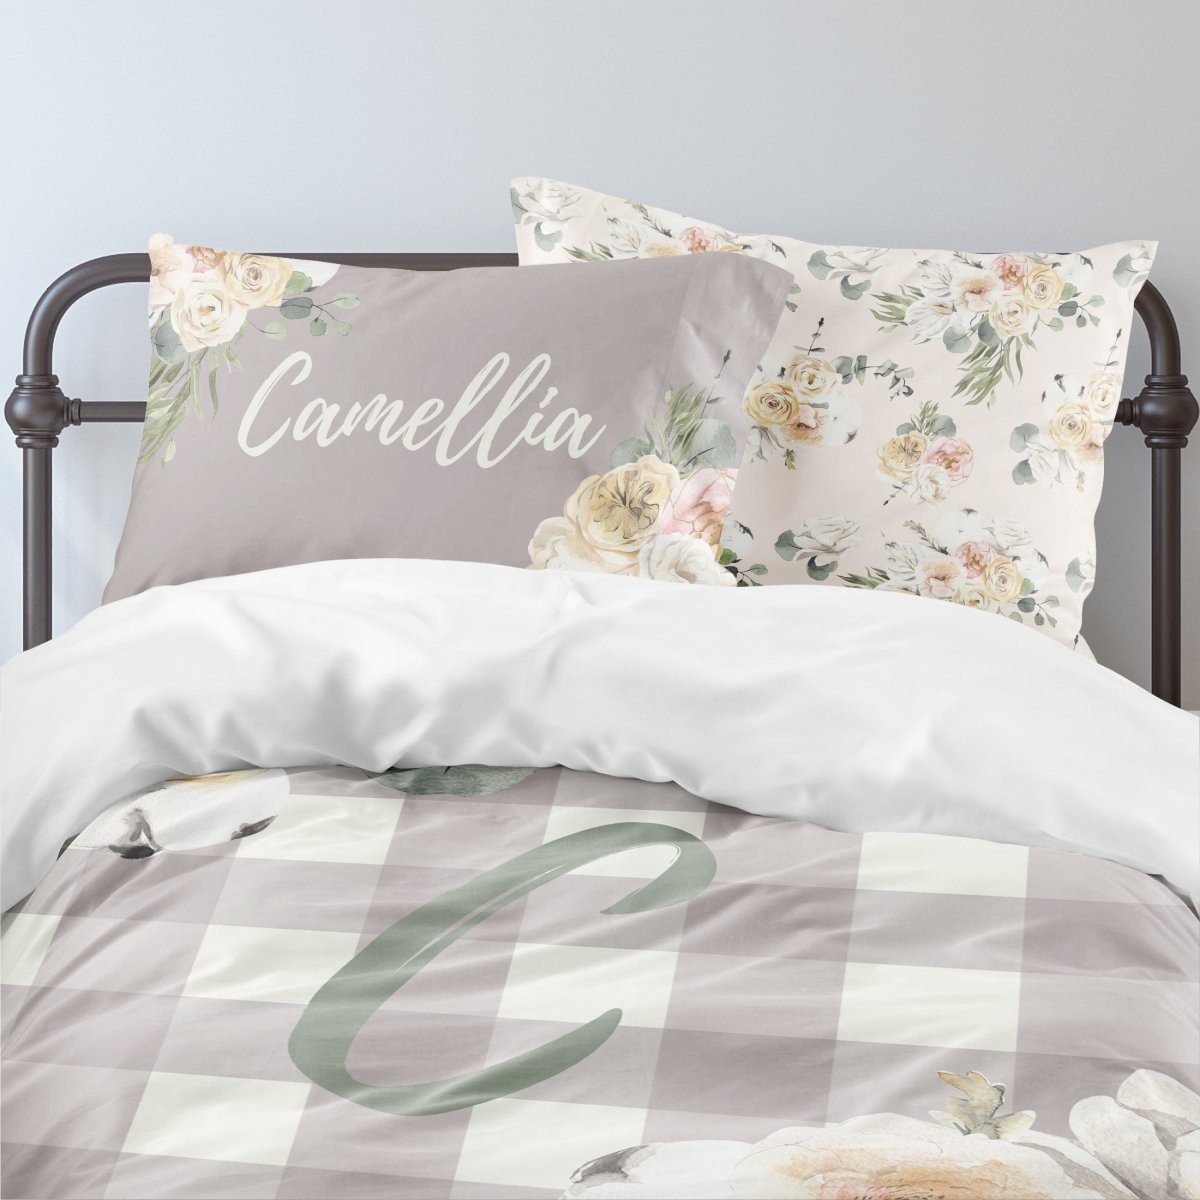 Farmhouse Floral Personalized Kids Bedding Set (Comforter or Duvet Cover) - Farmhouse Floral, gender_girl, text